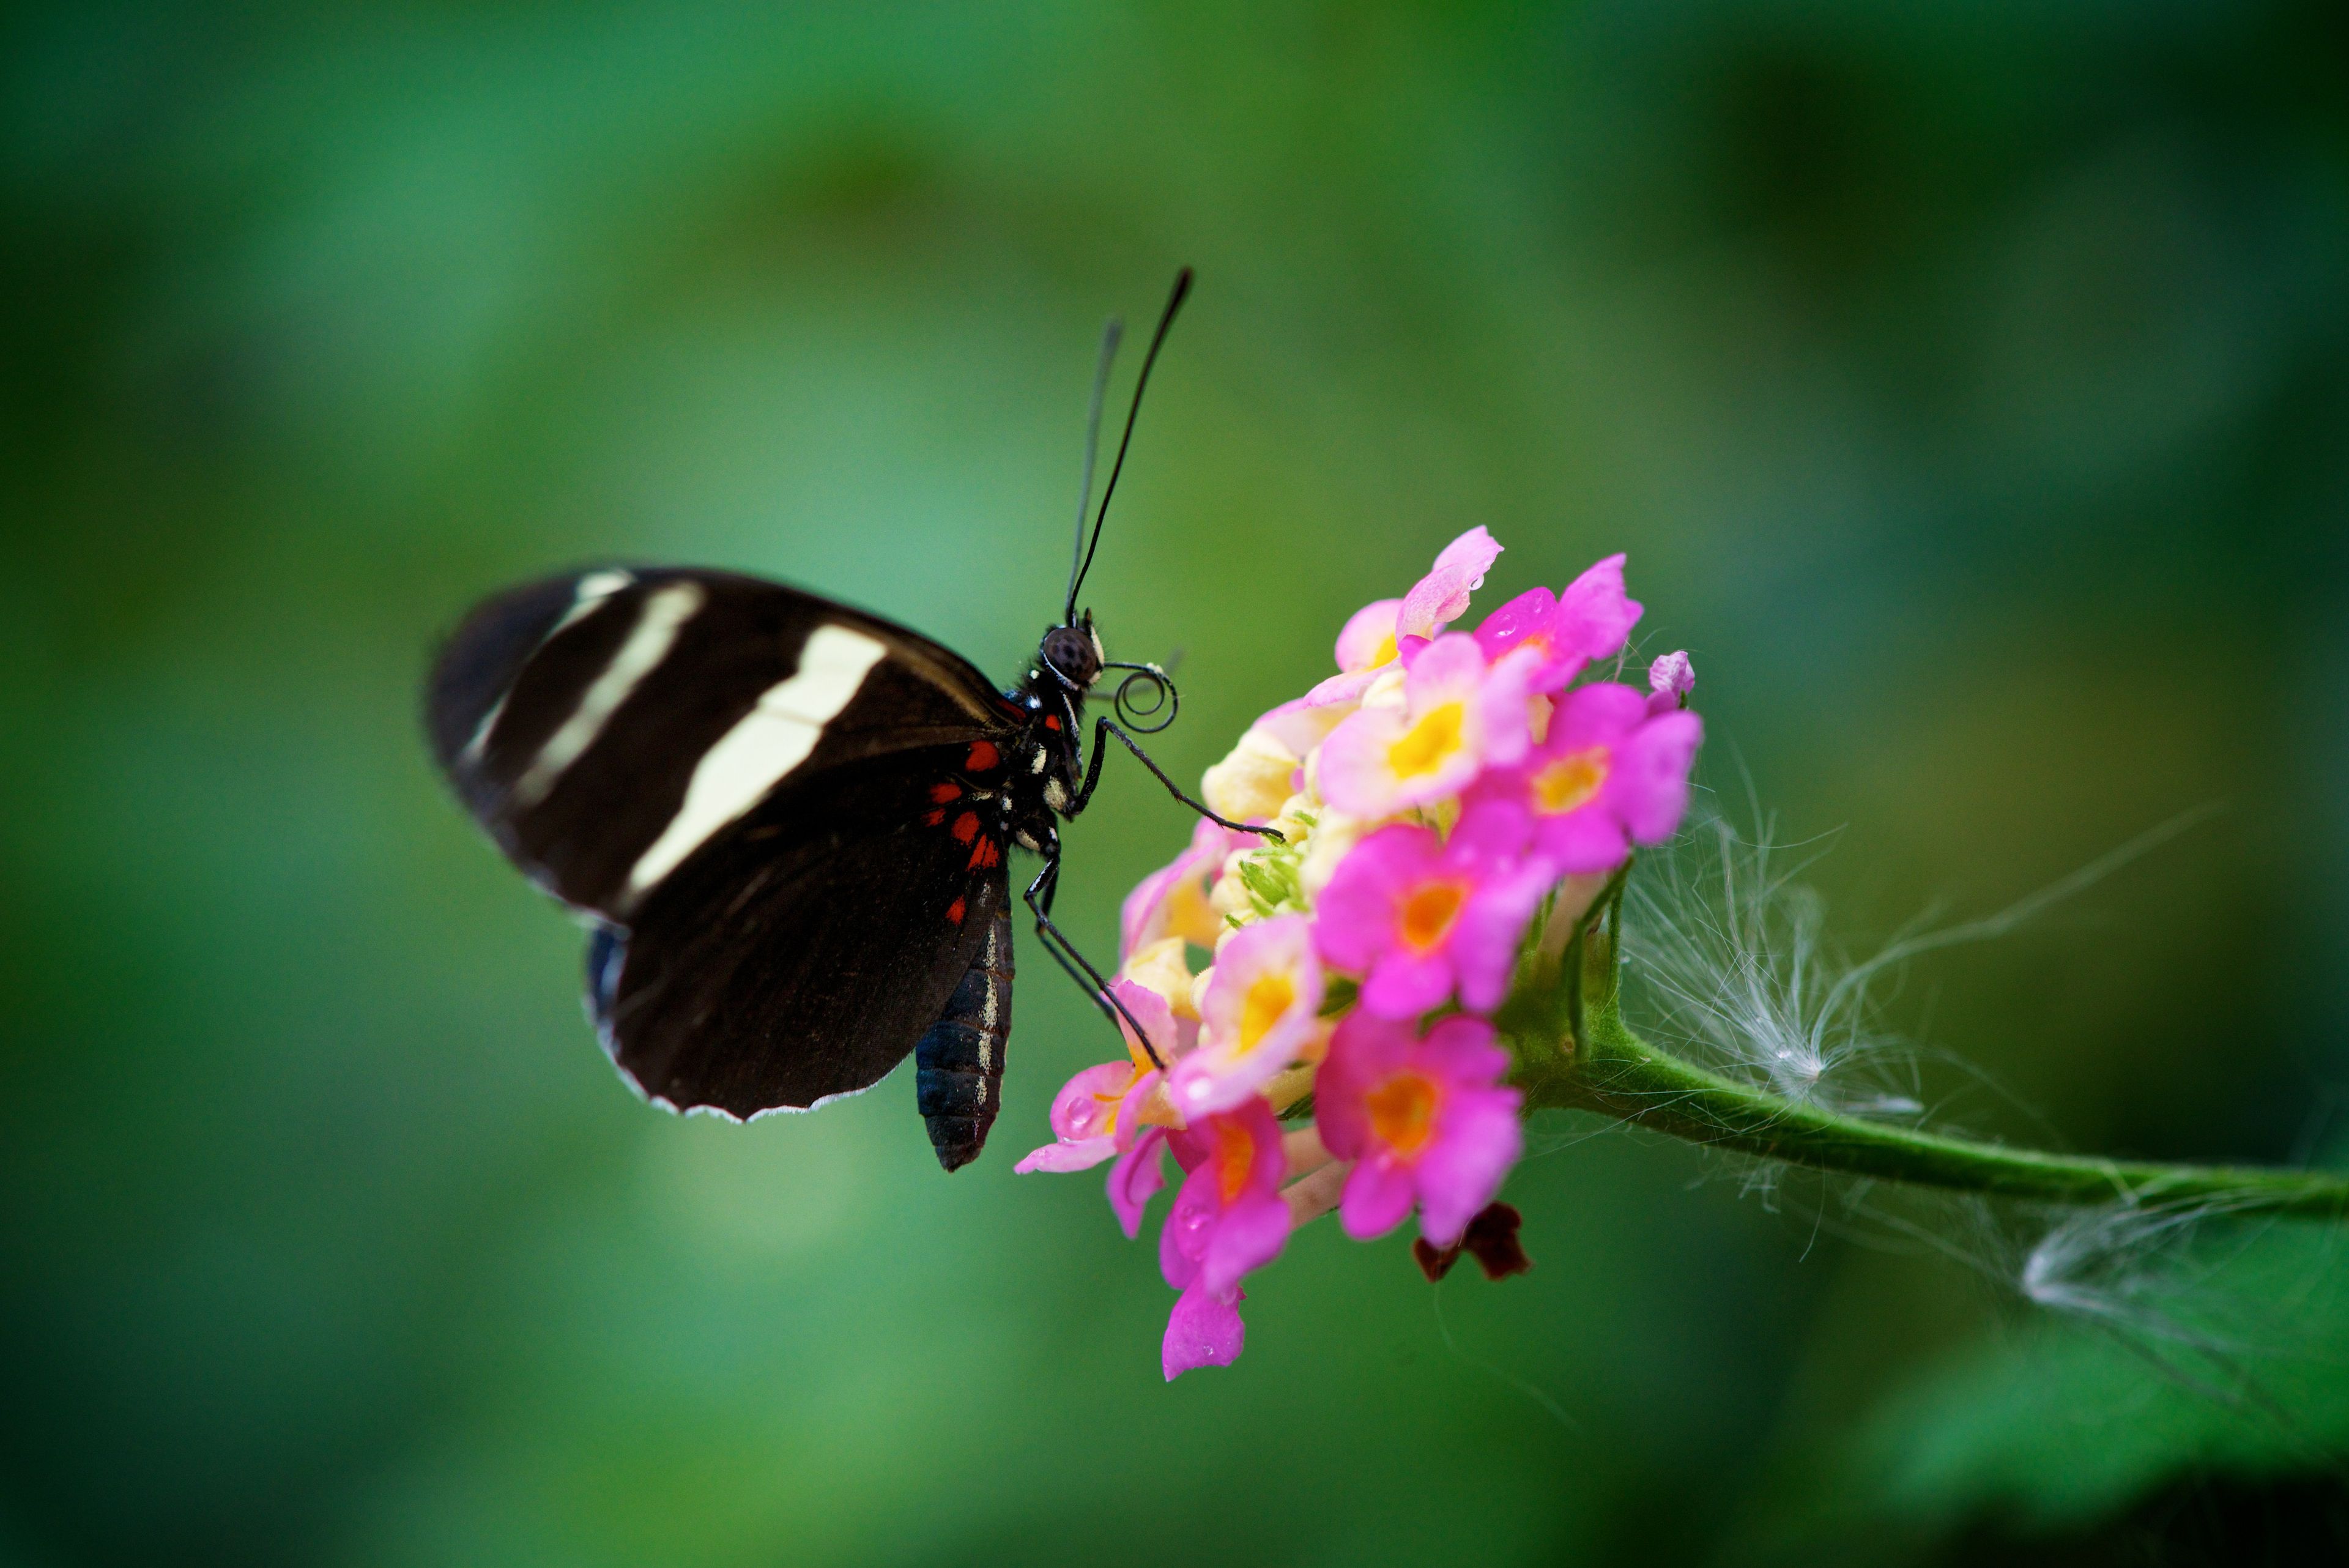 A portrait of a butterfly on flowers.